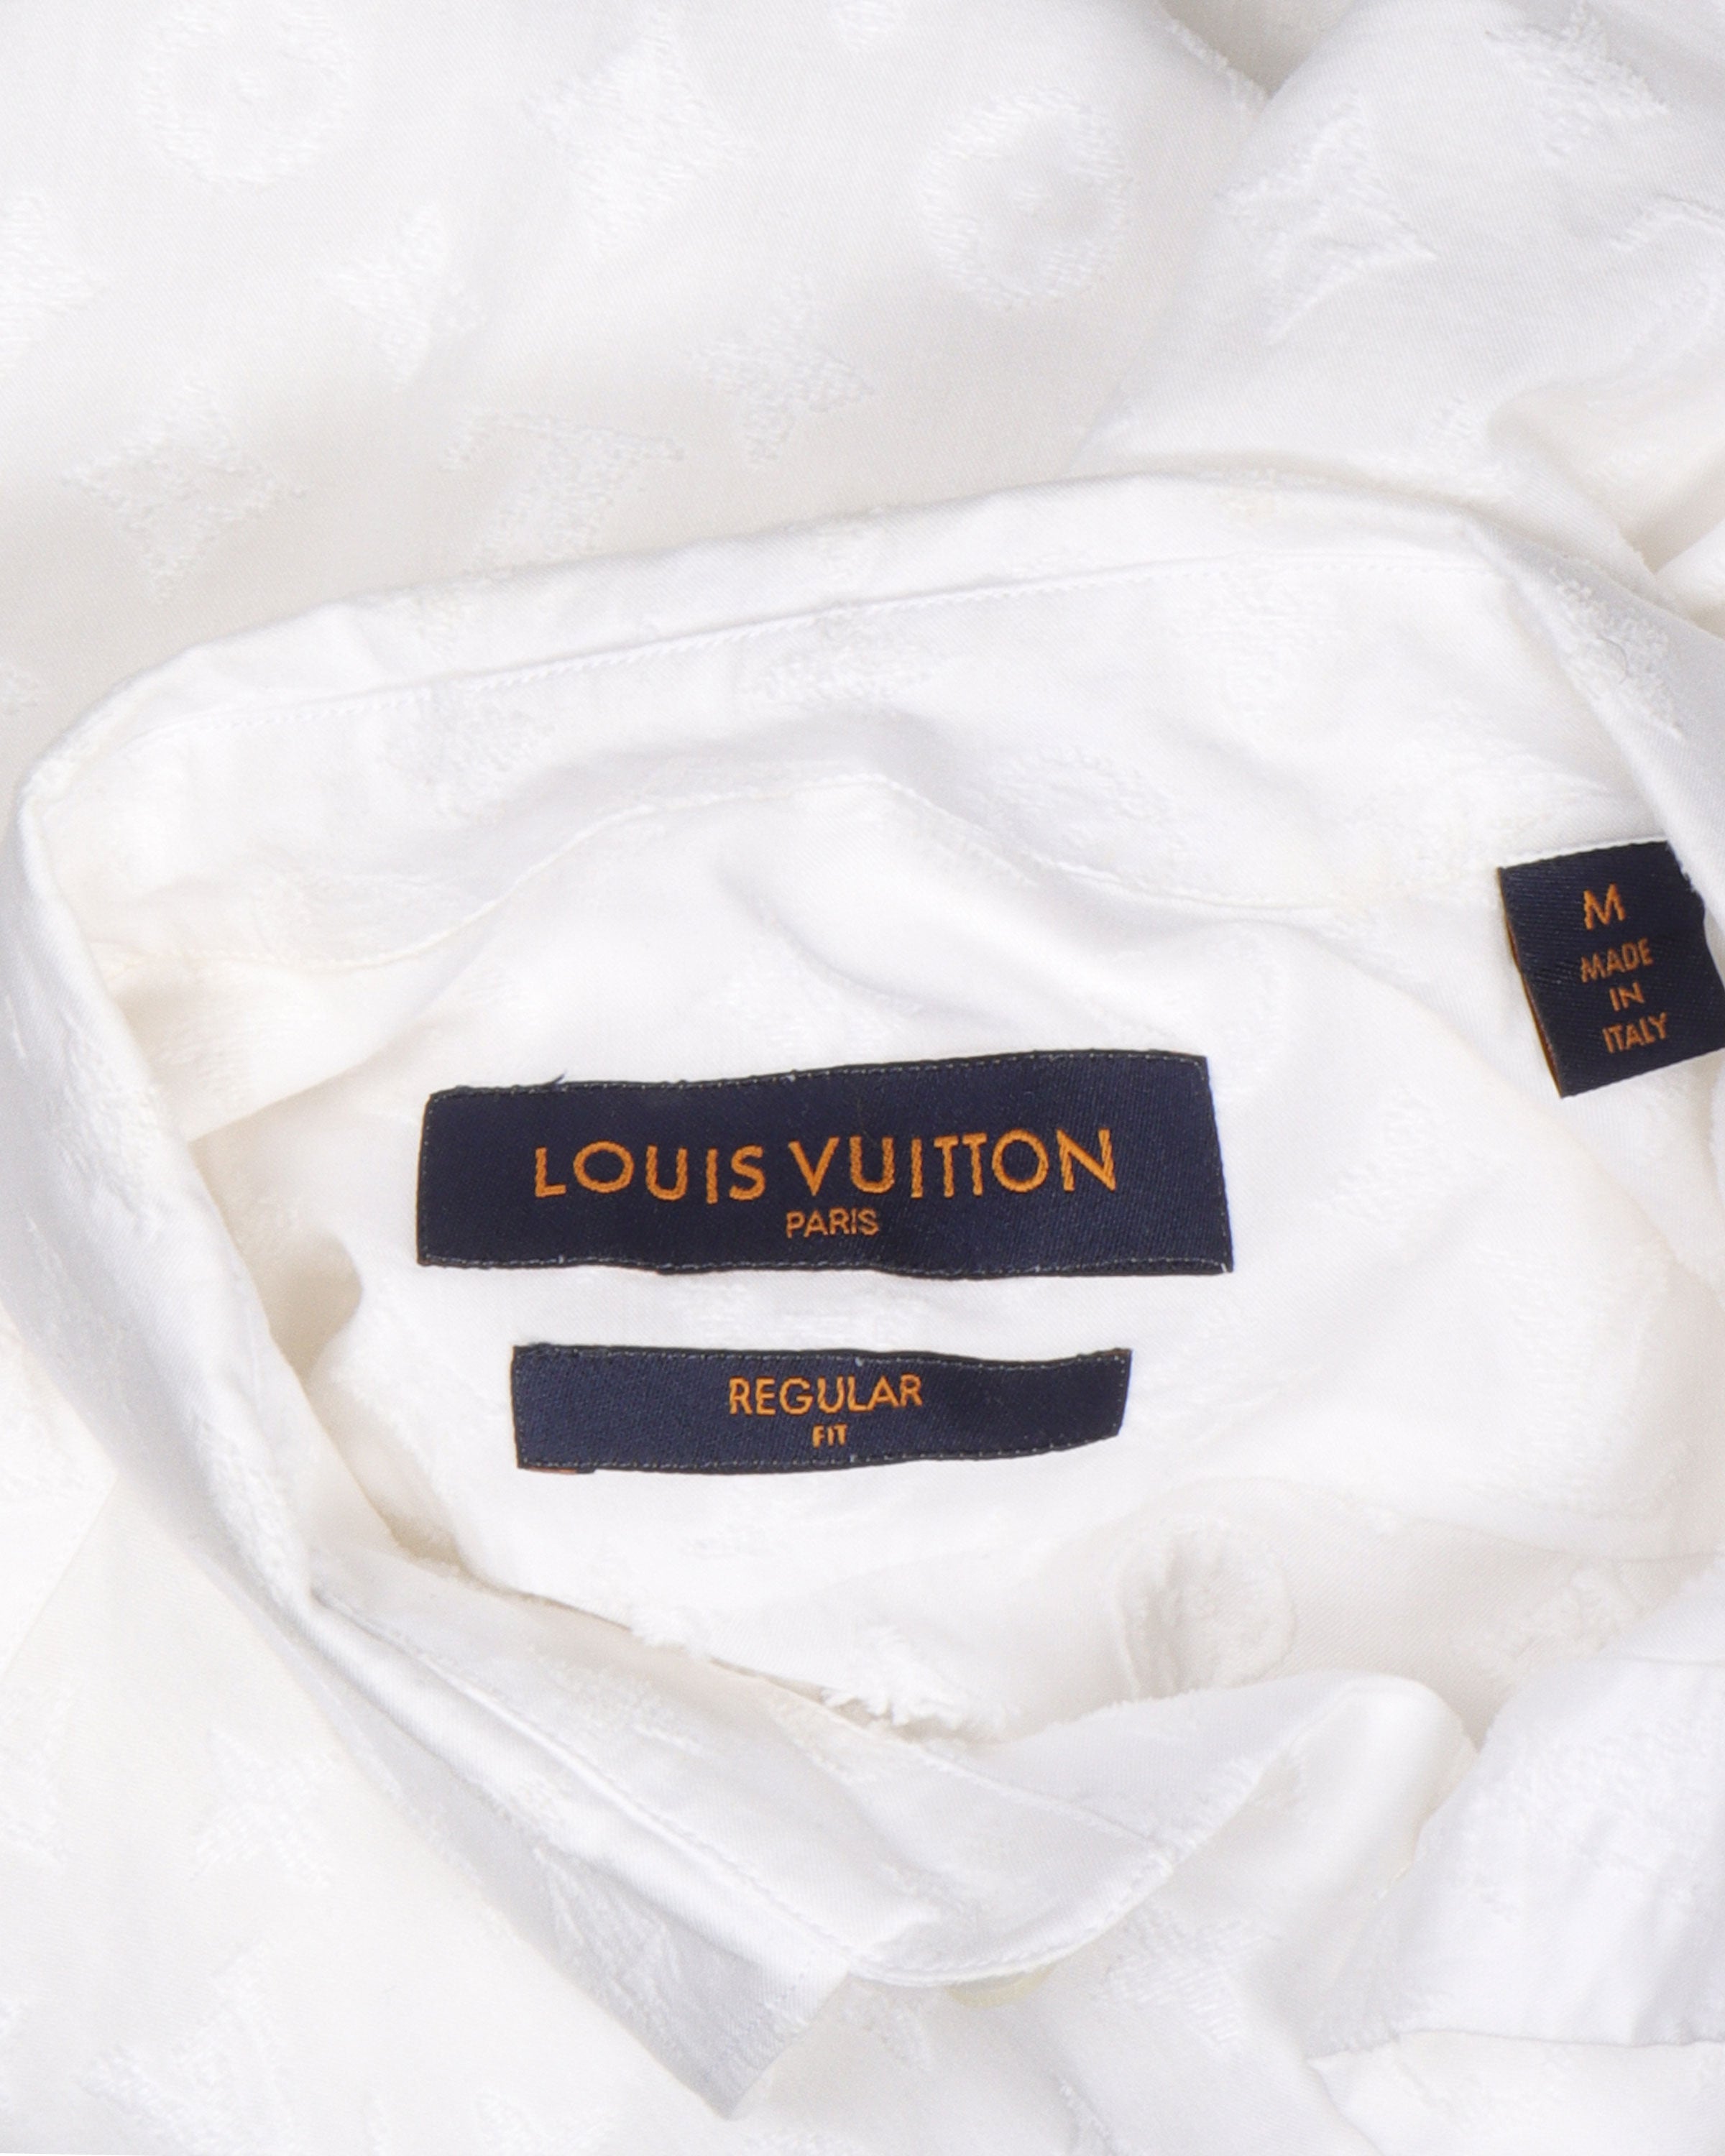 Louis Vuitton Tonal Monogram Shirt